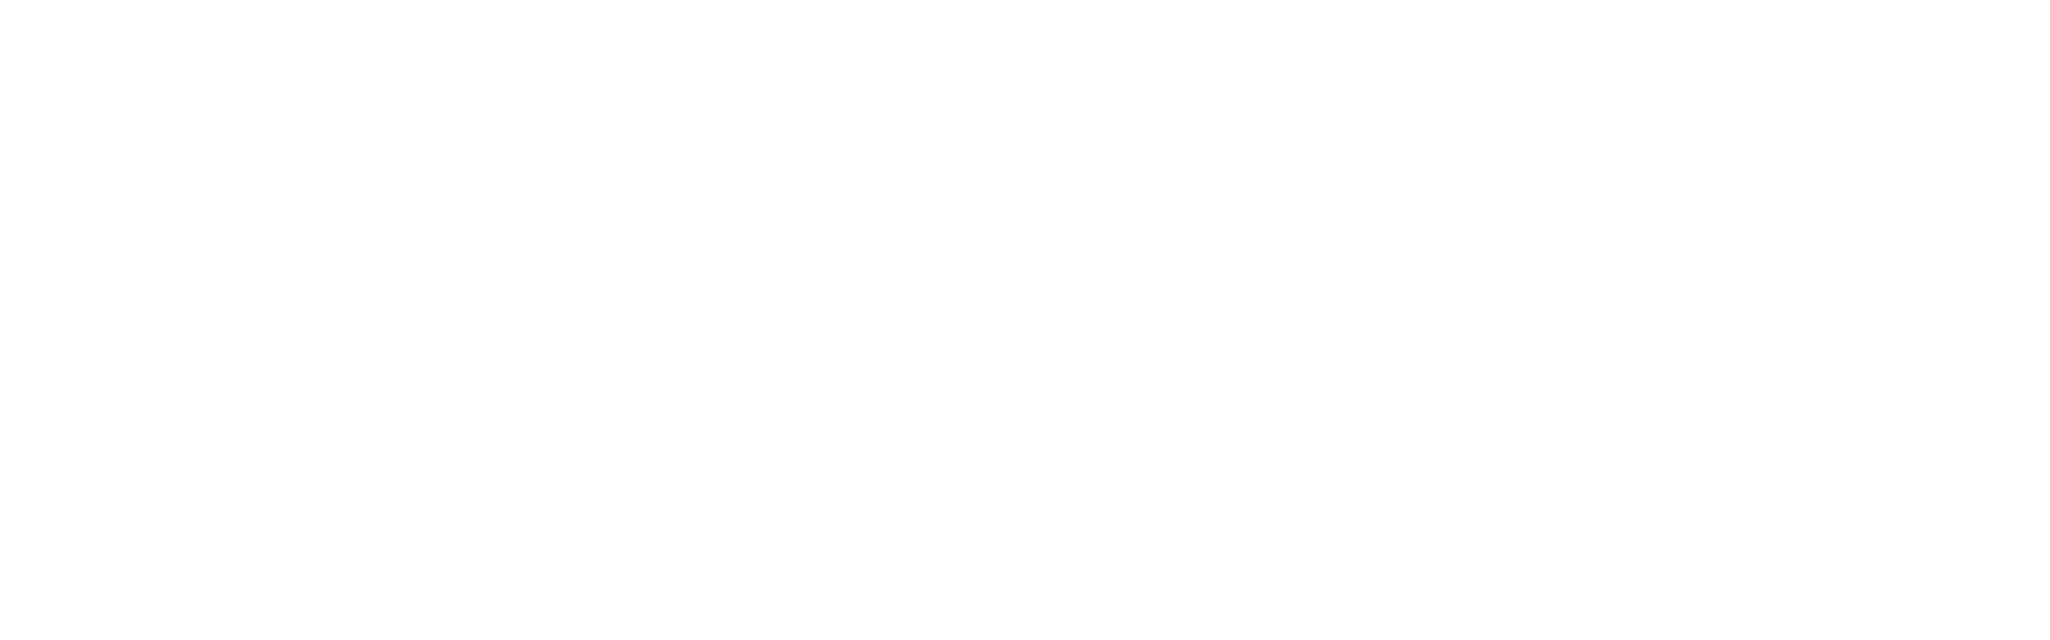 Merz Aesthetics logo